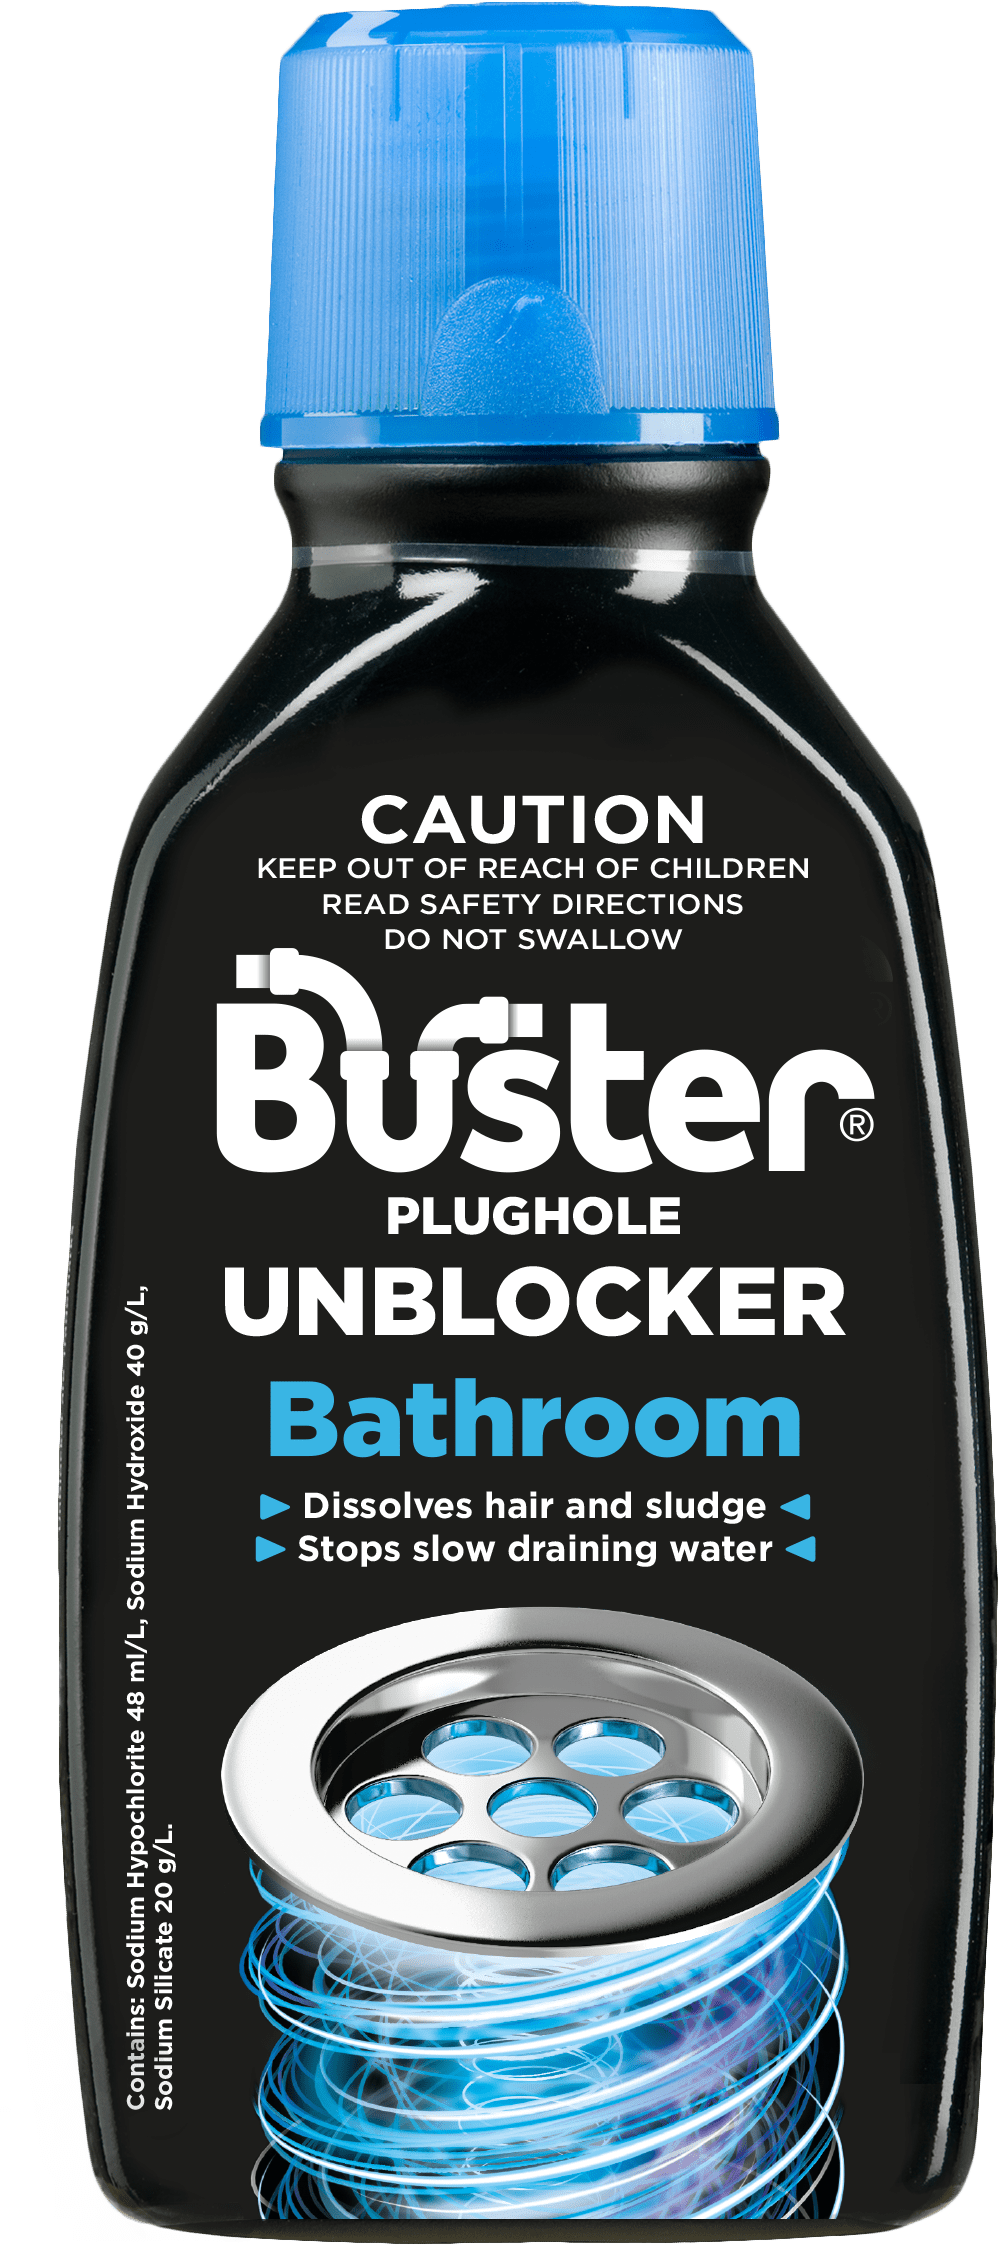 Bathroom Unblocker